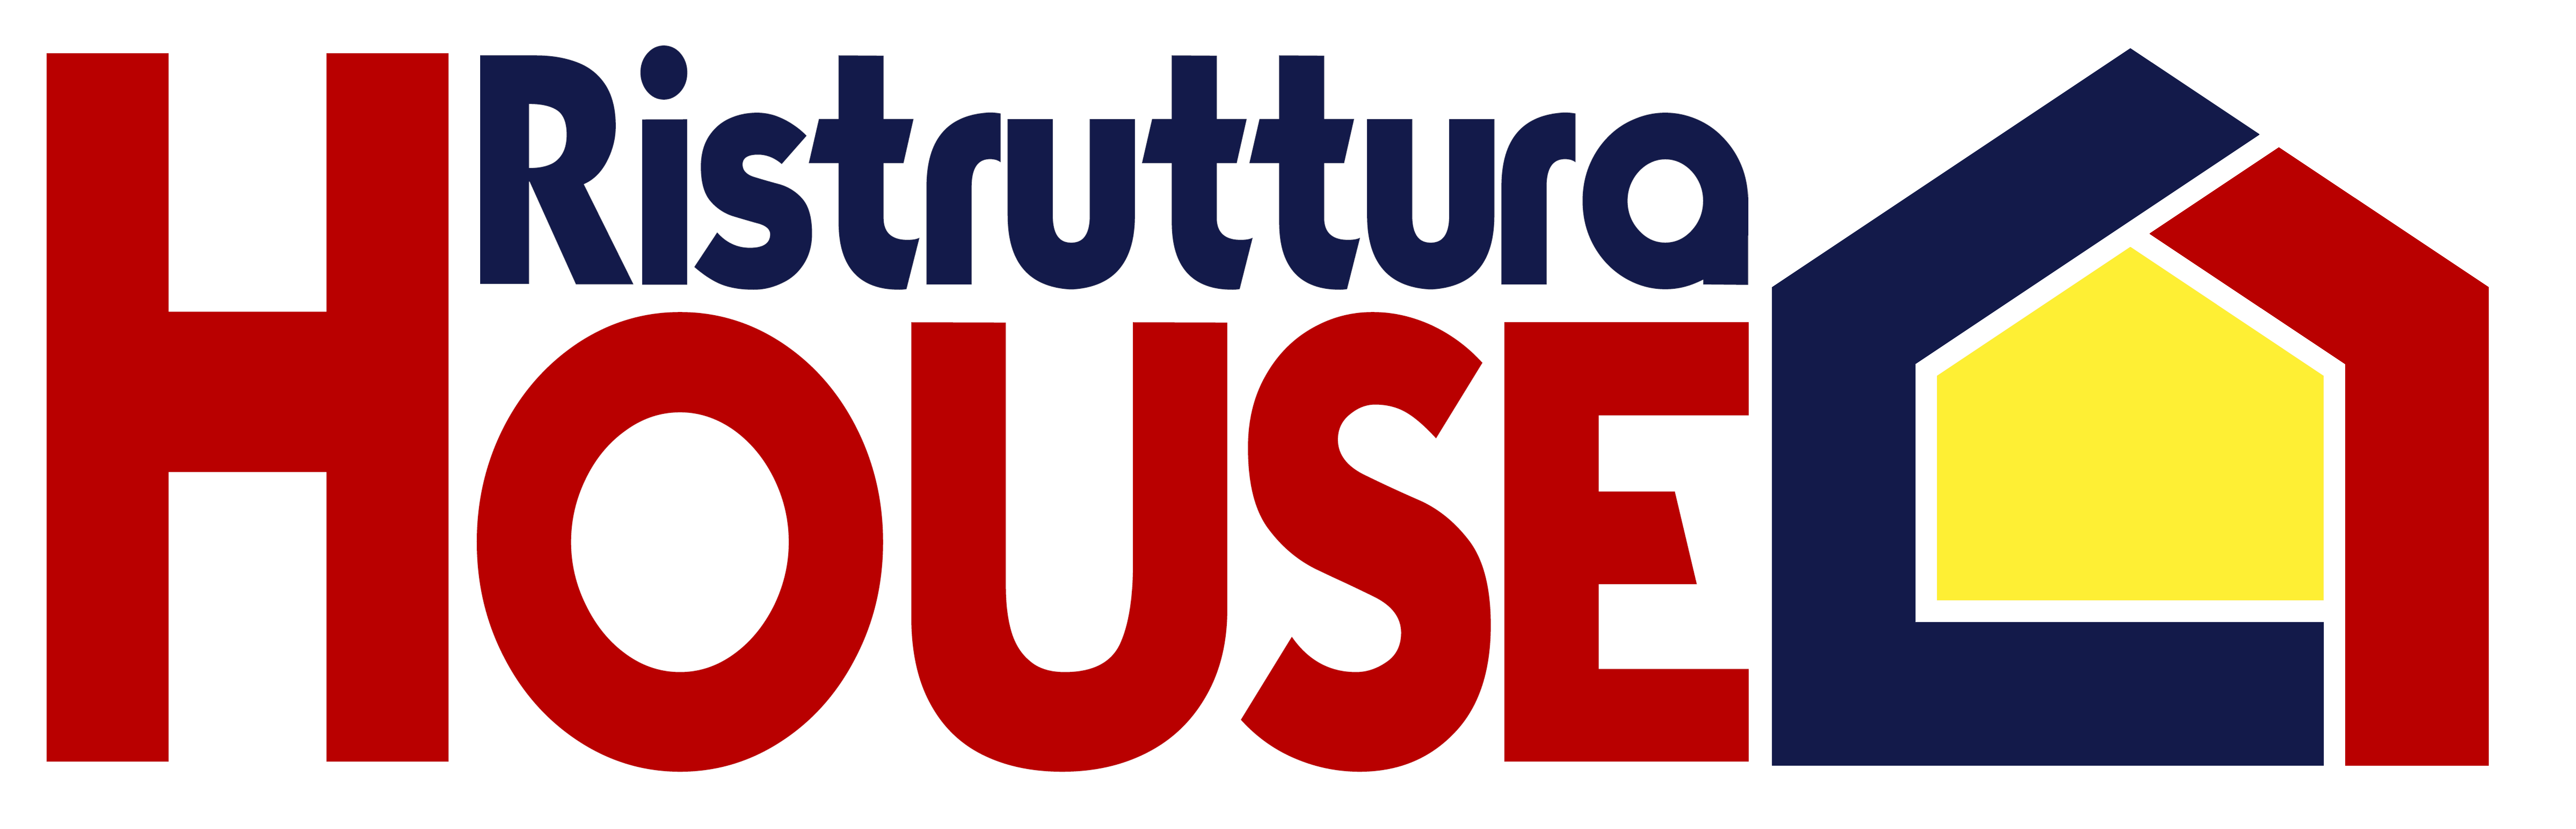 Ristruttura House – Servizi di ristrutturazione